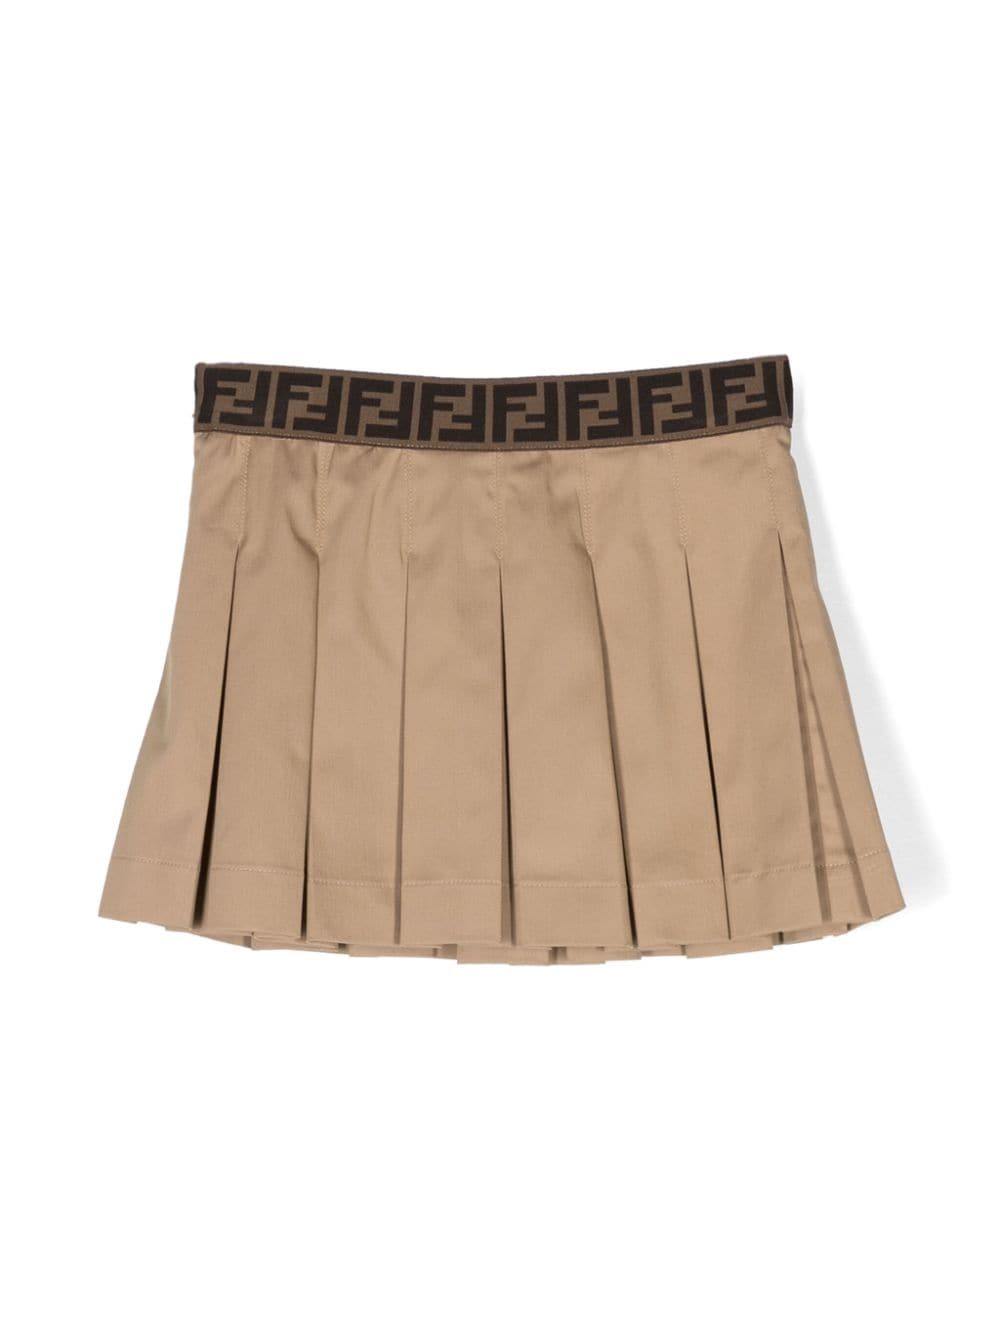 FF pattern skirt